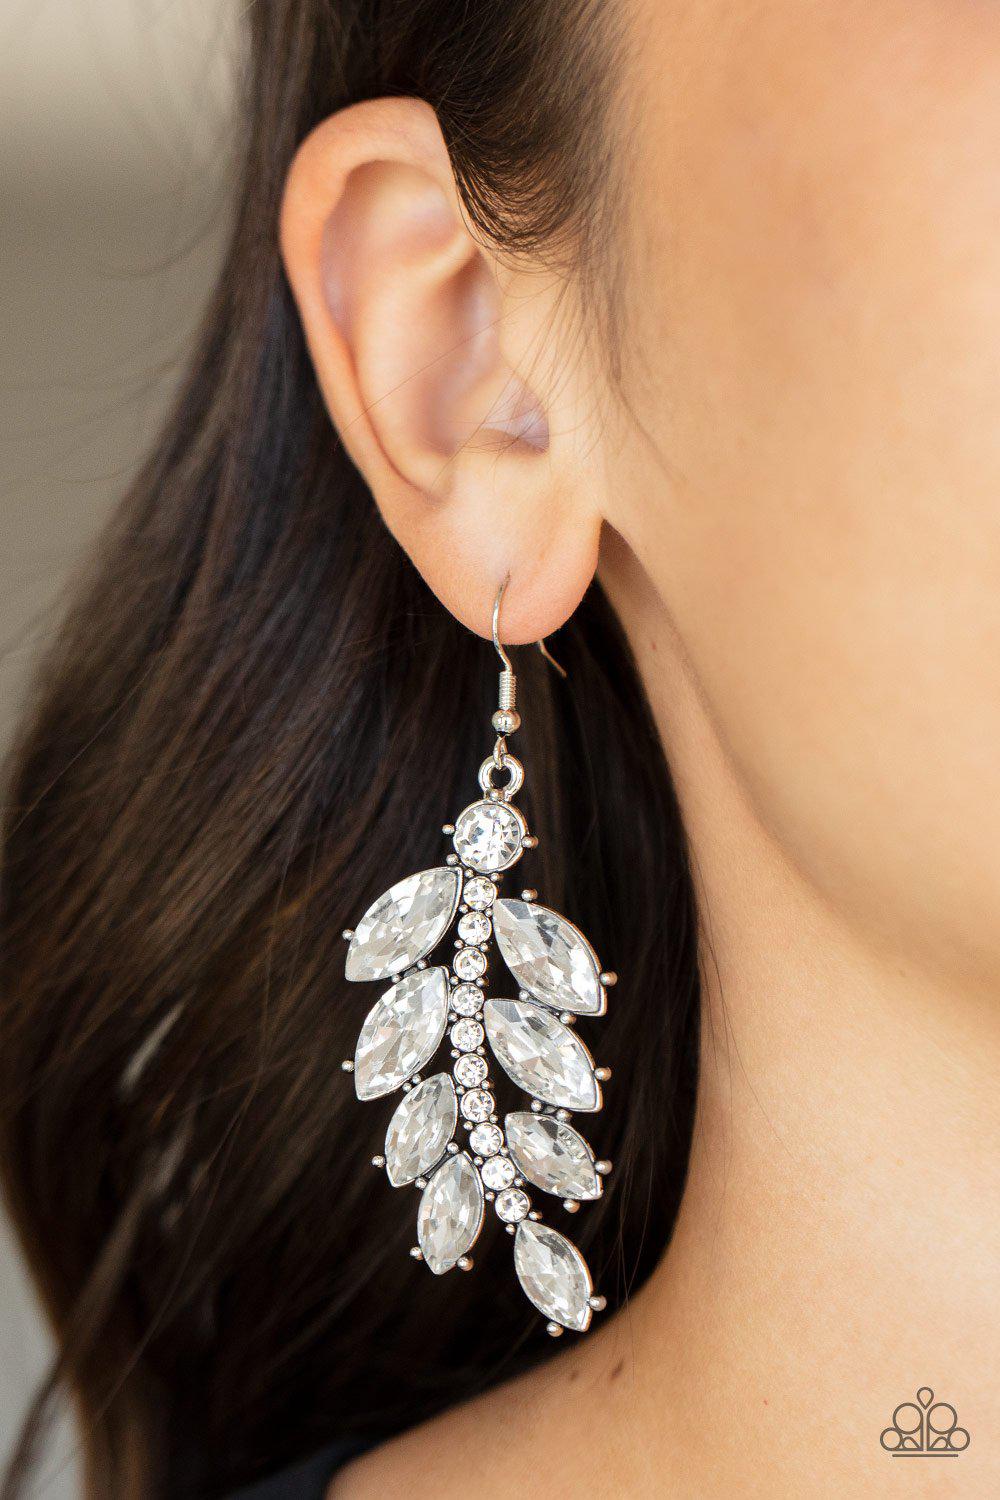 Ice Garden Gala White Rhinestone Leaf Earrings - Paparazzi Accessories- lightbox - CarasShop.com - $5 Jewelry by Cara Jewels